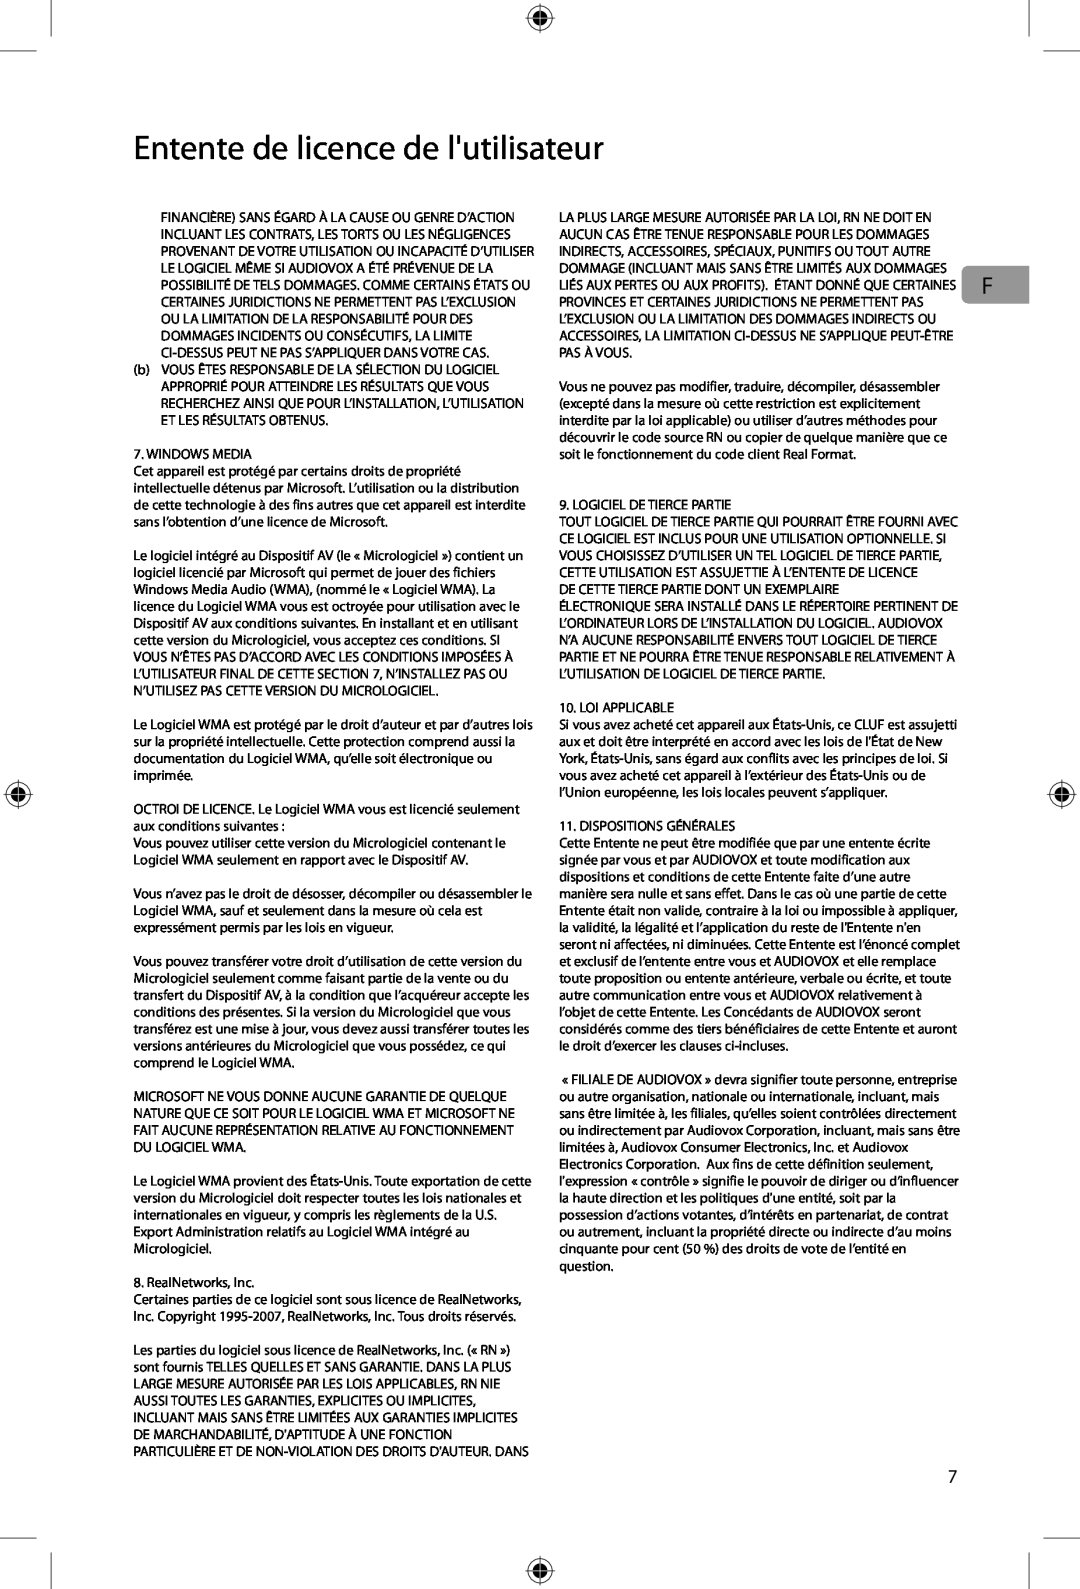 Acoustic Research ARIRC205, ARIRC200 user manual Entente de licence de lutilisateur, Windows Media 